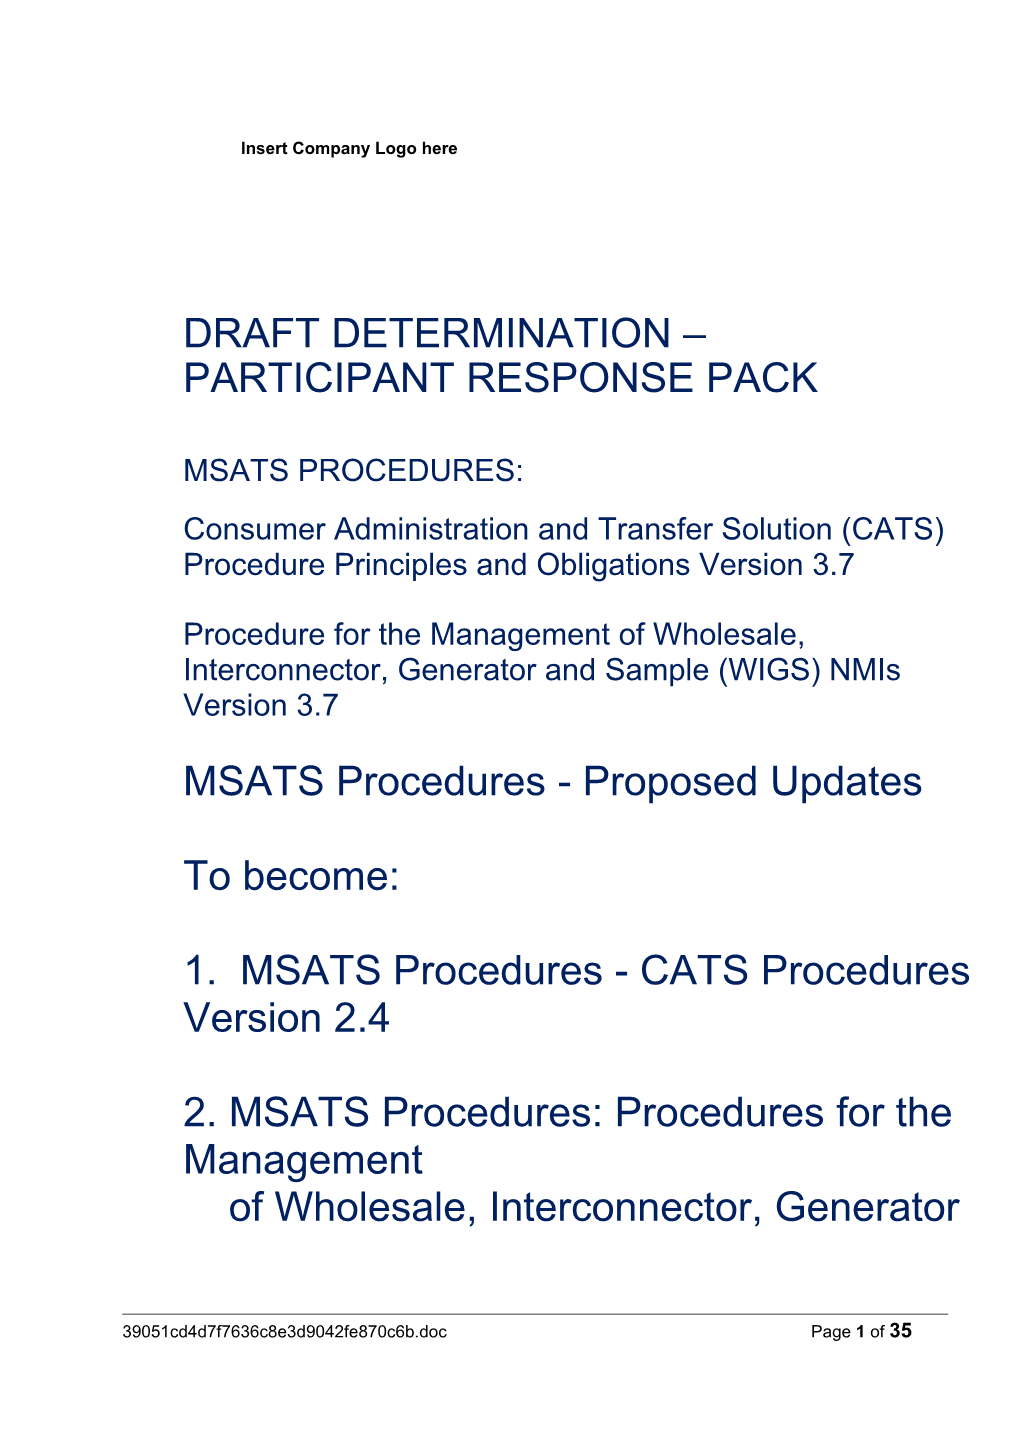 MSATS Procedures Vx.X Participant Response Pack Template V0.01